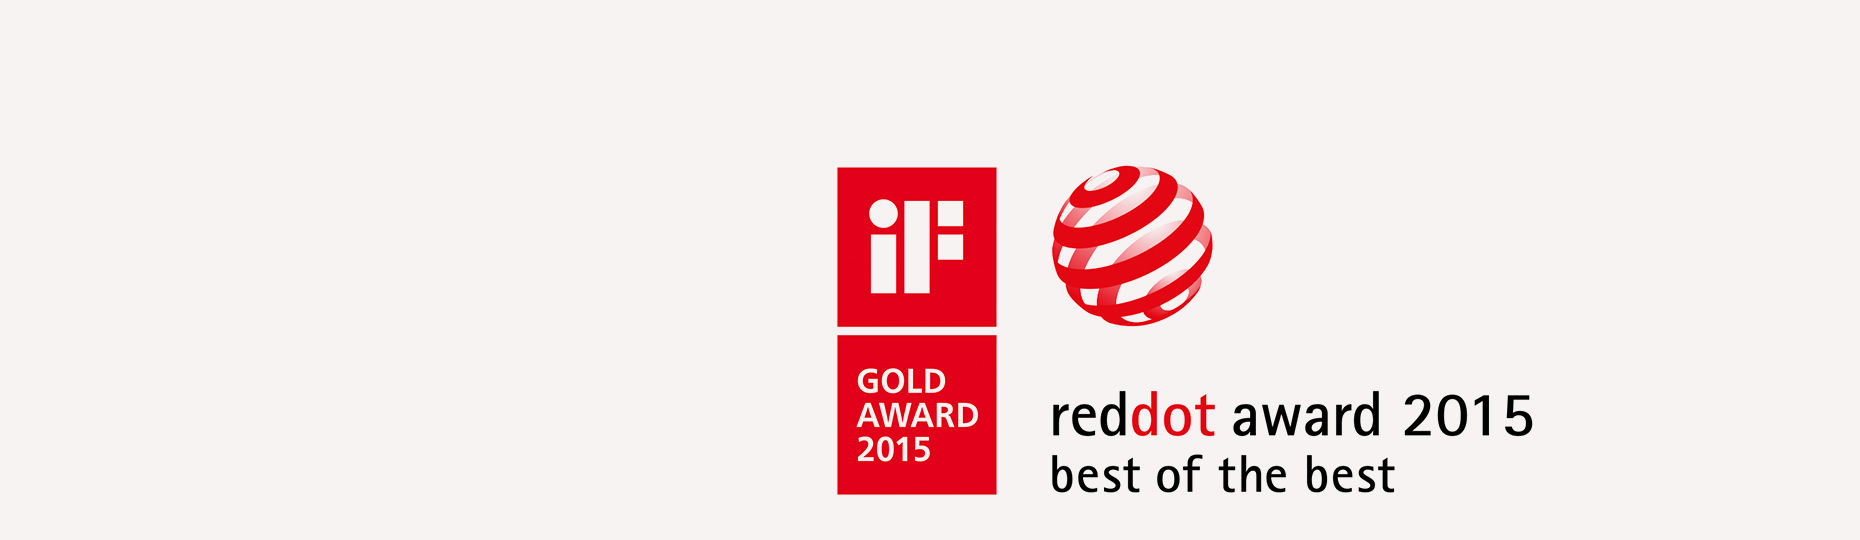 logo image of iF Design Award 2015 and Red Dot Design Award 2015